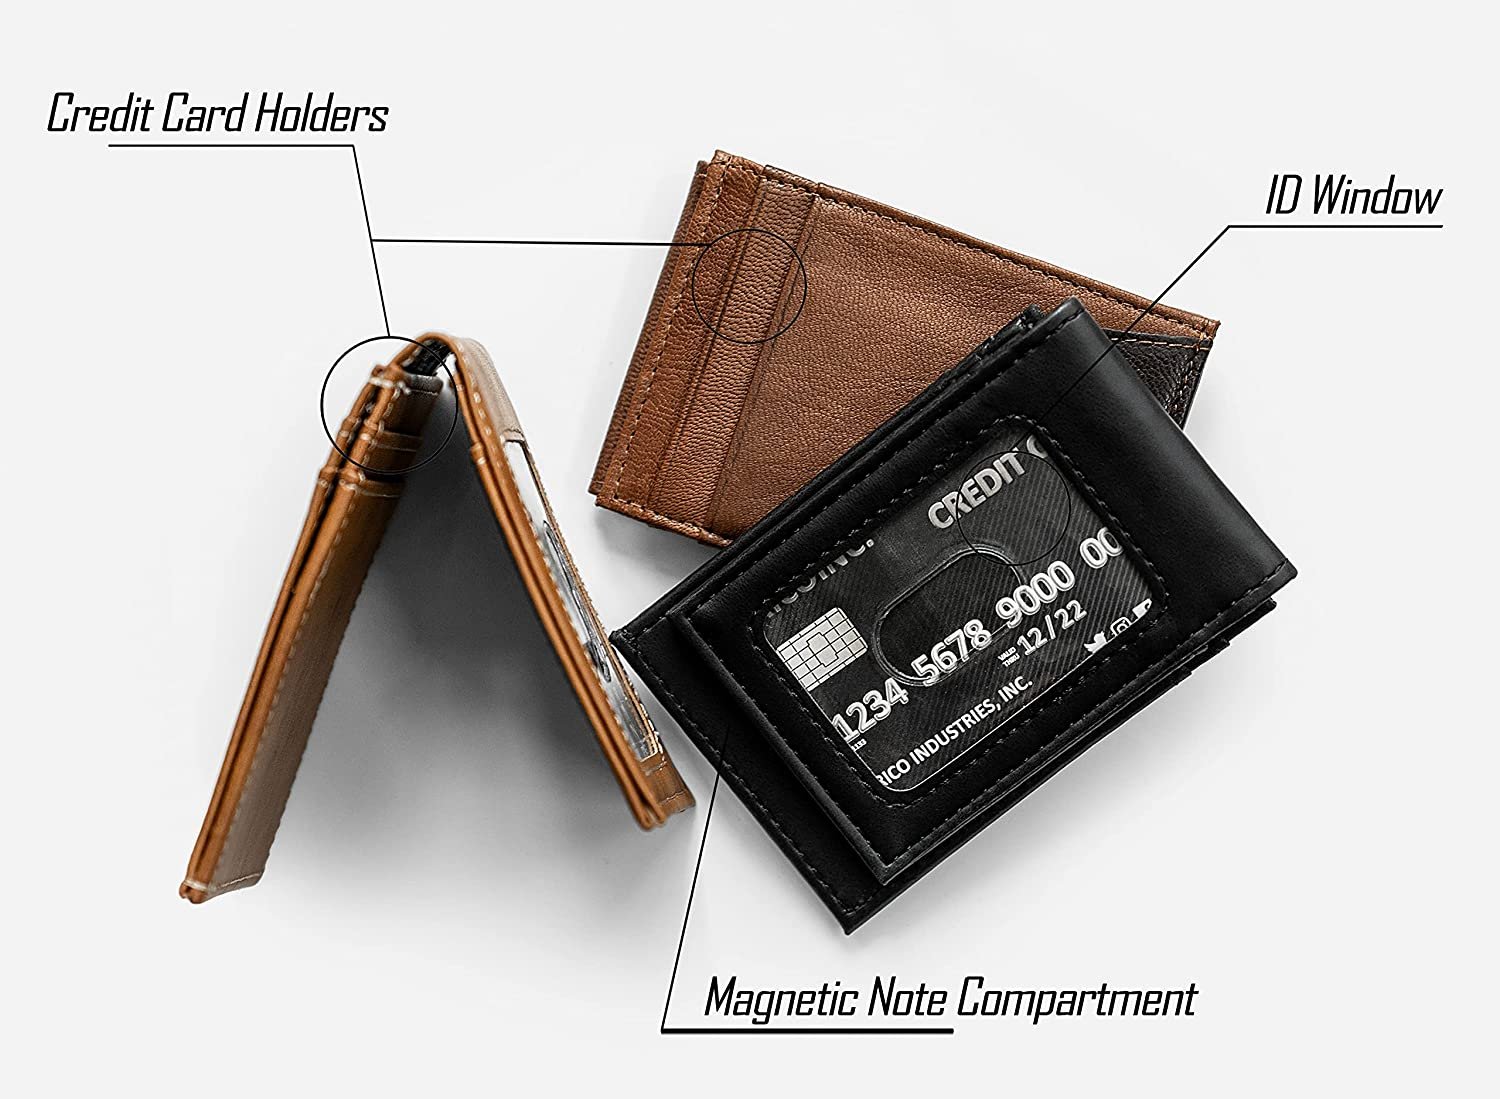 Minnesota Timberwolves Premium Brown Leather Wallet, Front Pocket Magnetic Money Clip, Laser Engraved, Vegan